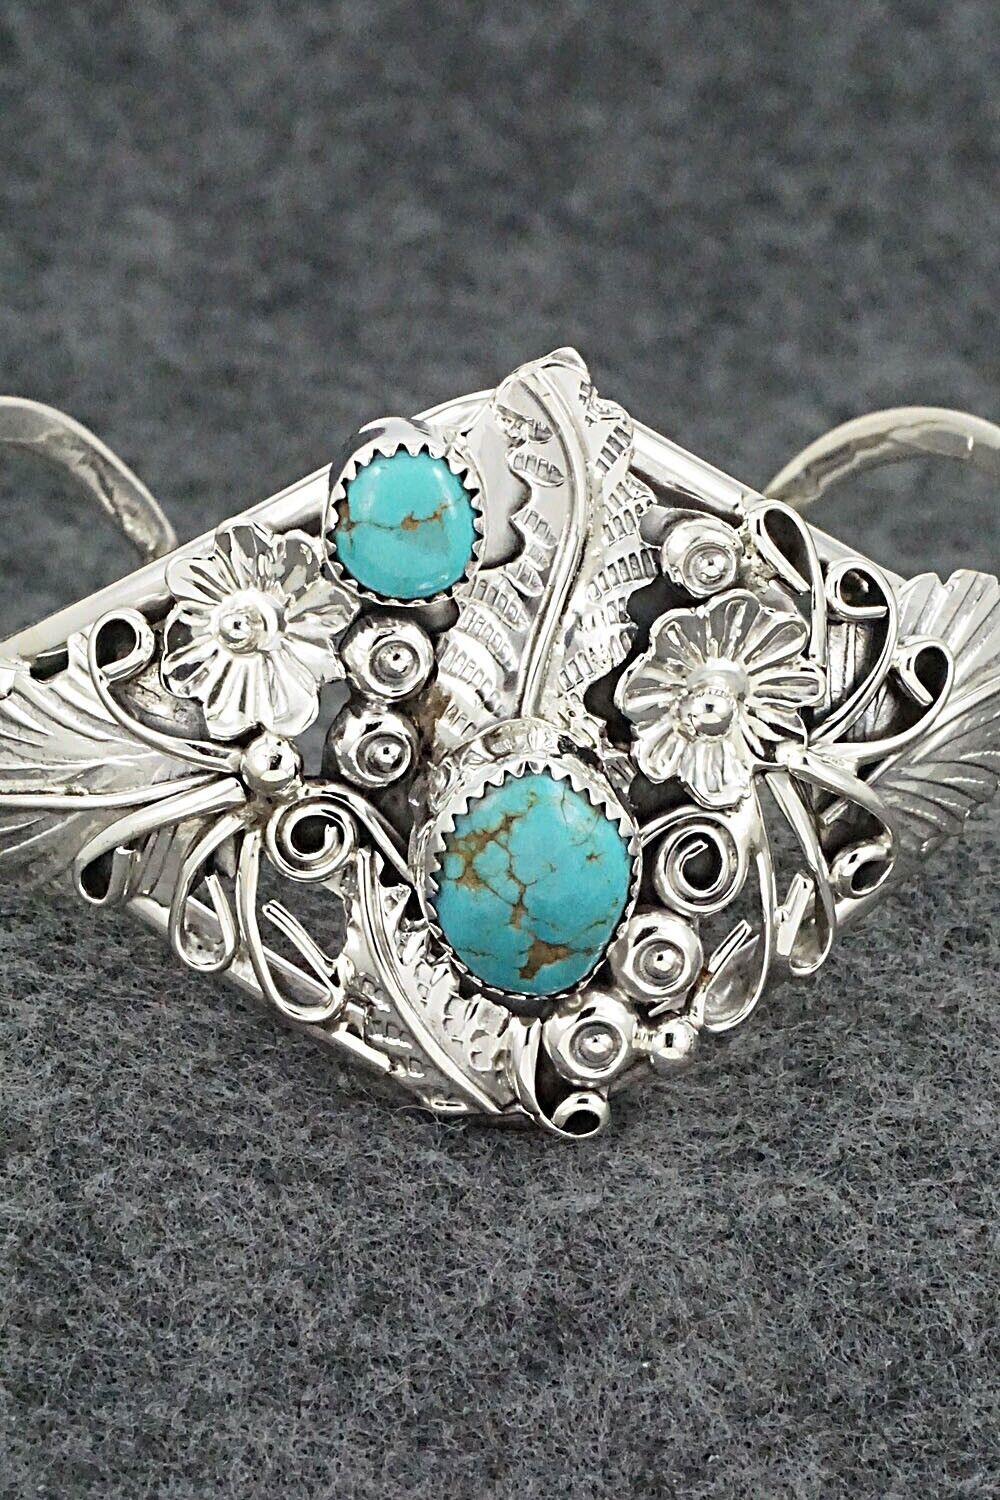 Turquoise & Sterling Silver Bracelet - Harry B. Yazzie